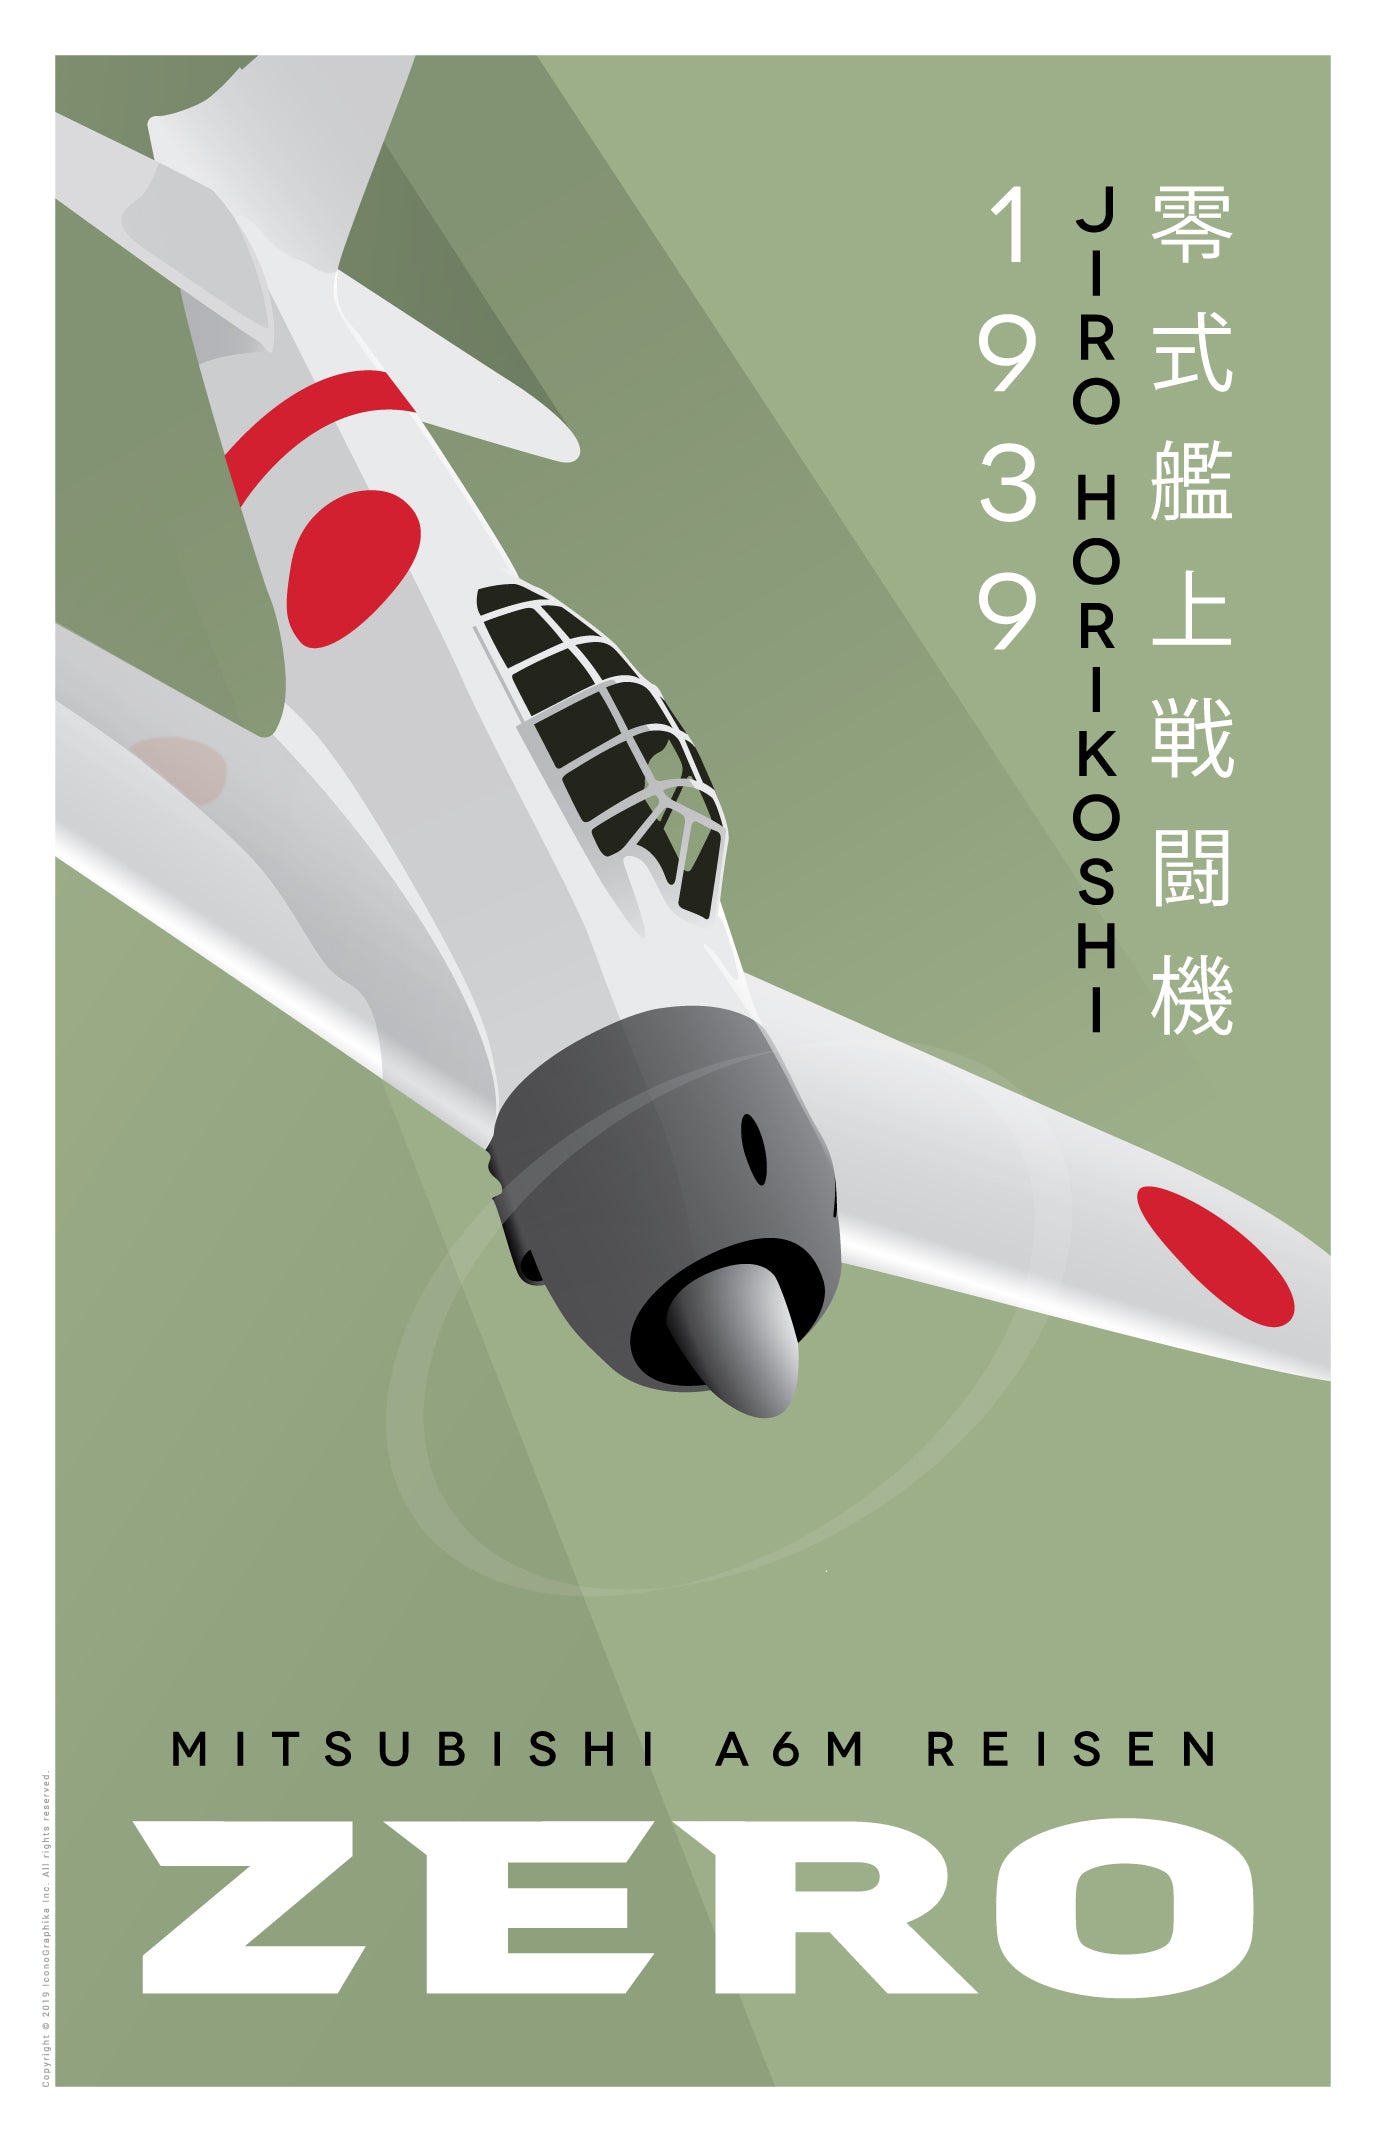 Mitsubishi A6M Reisen